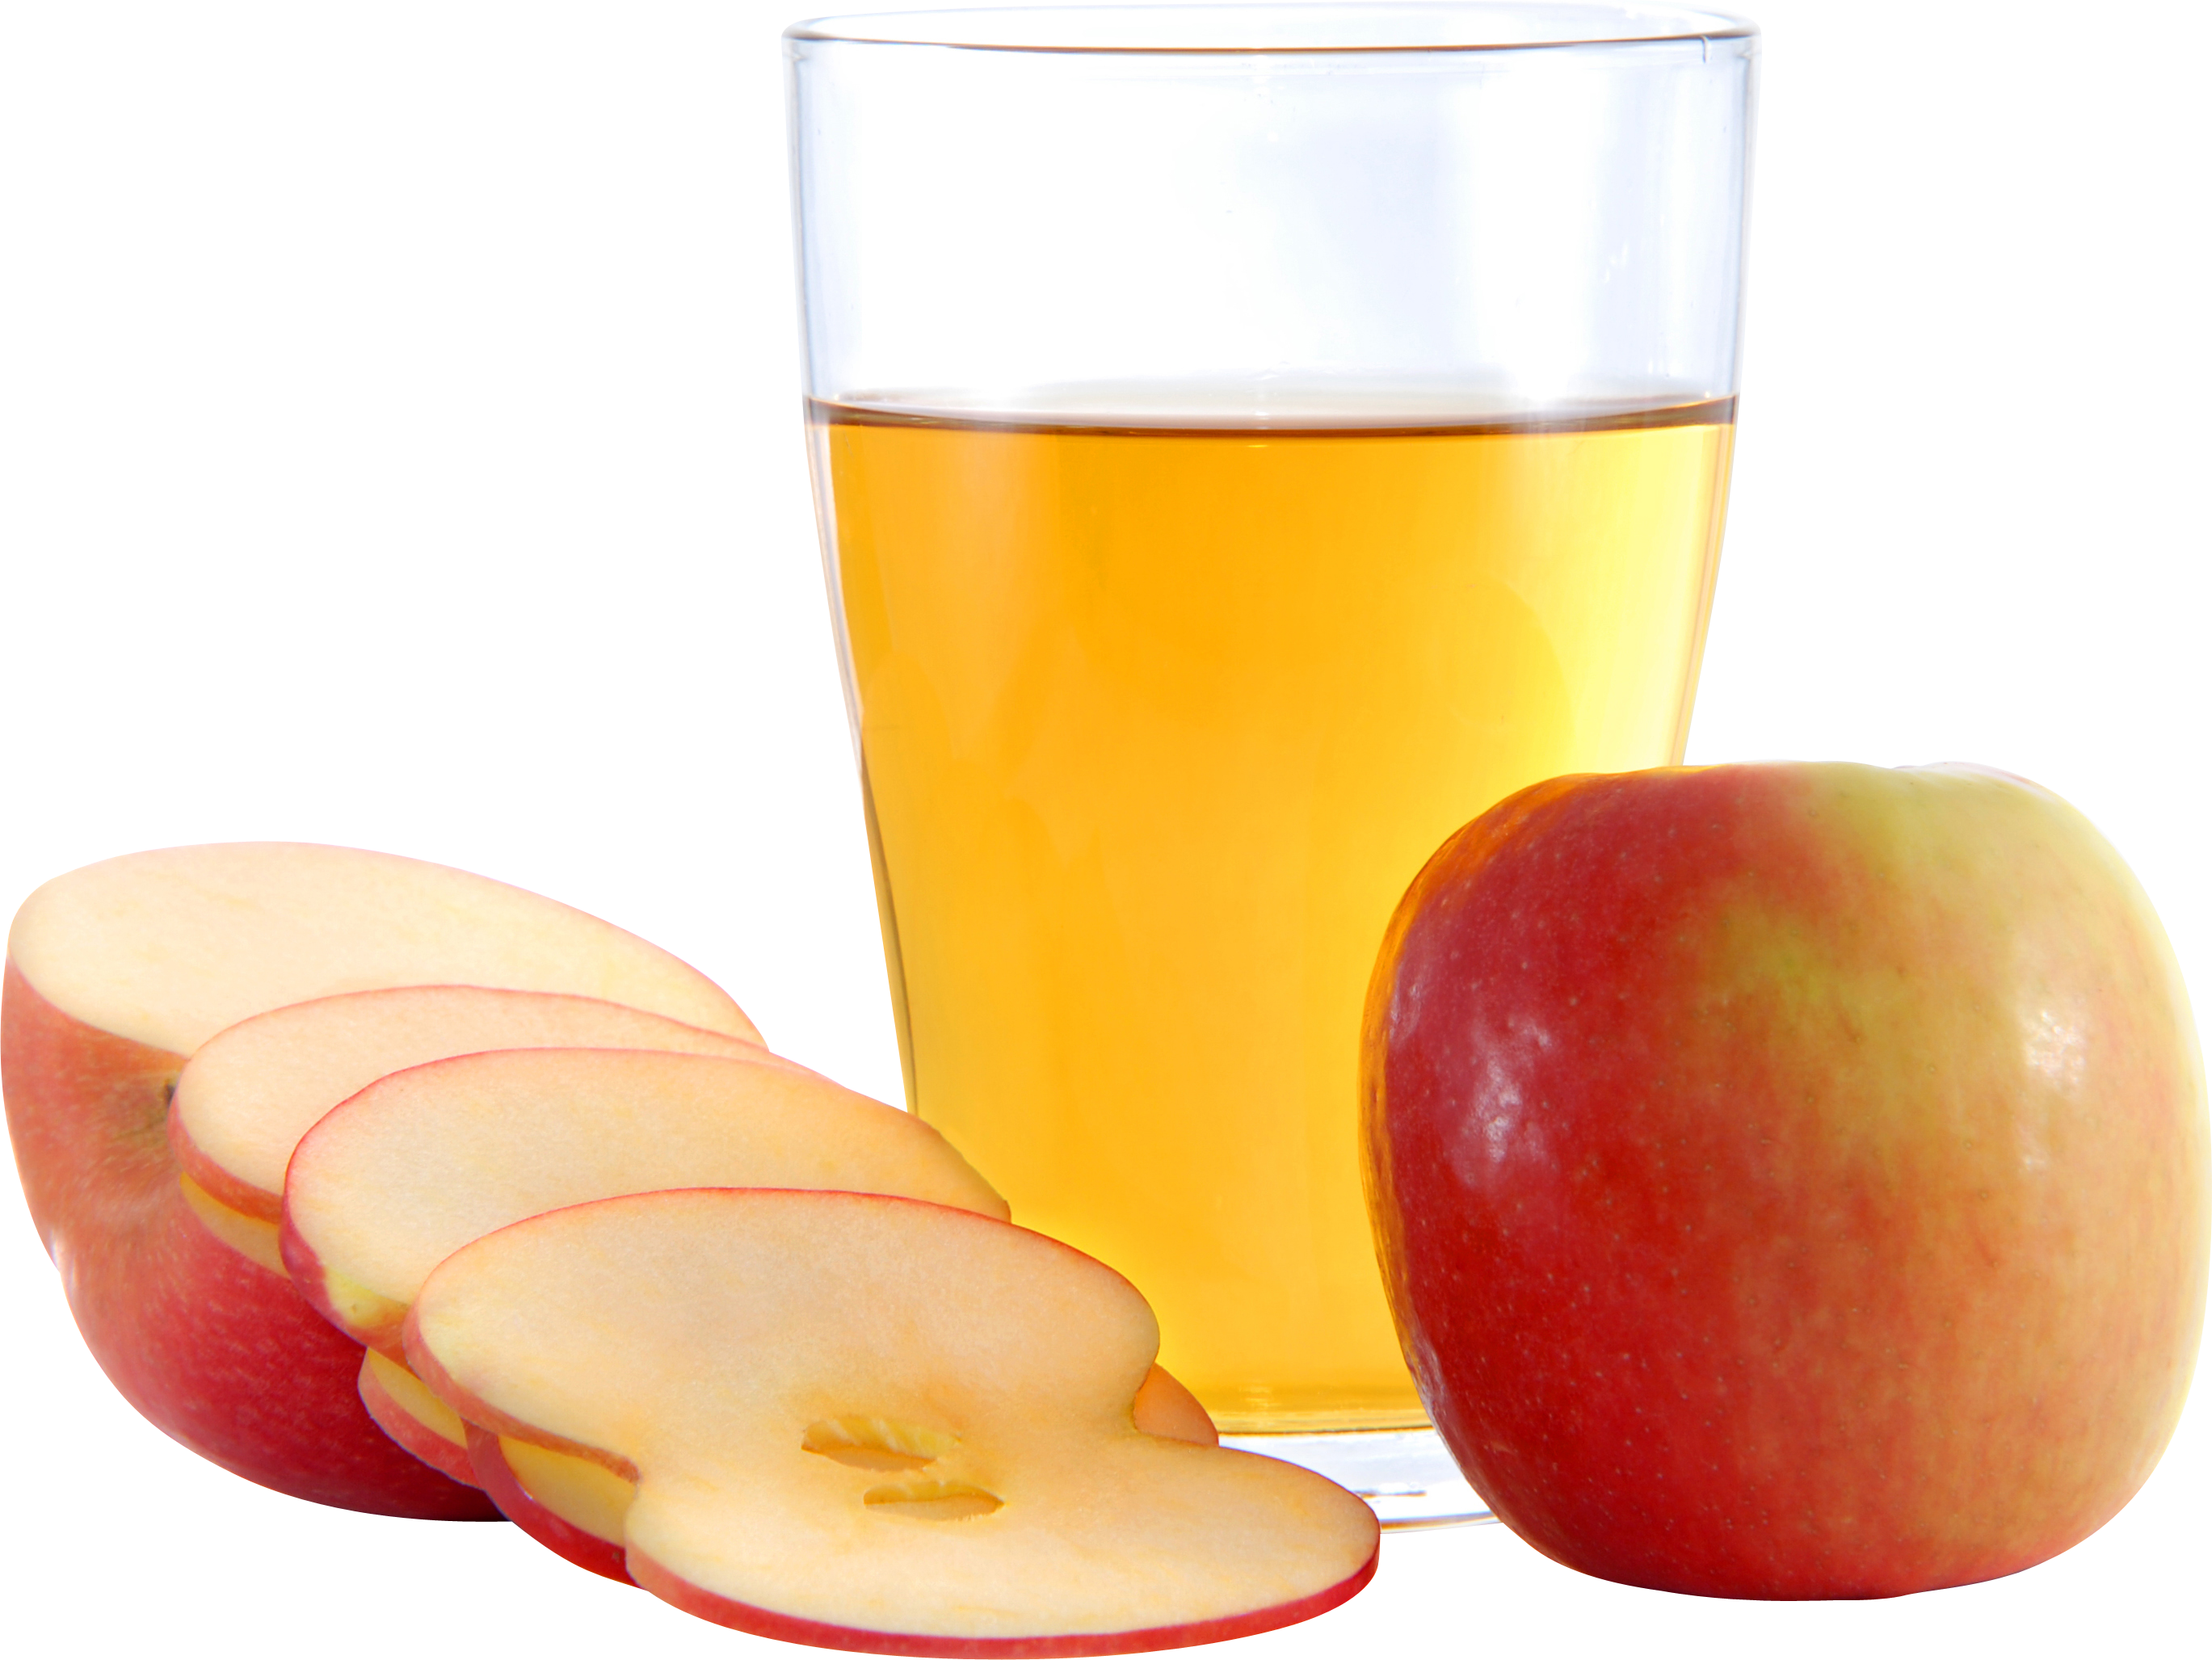 Apple Juice PNG image